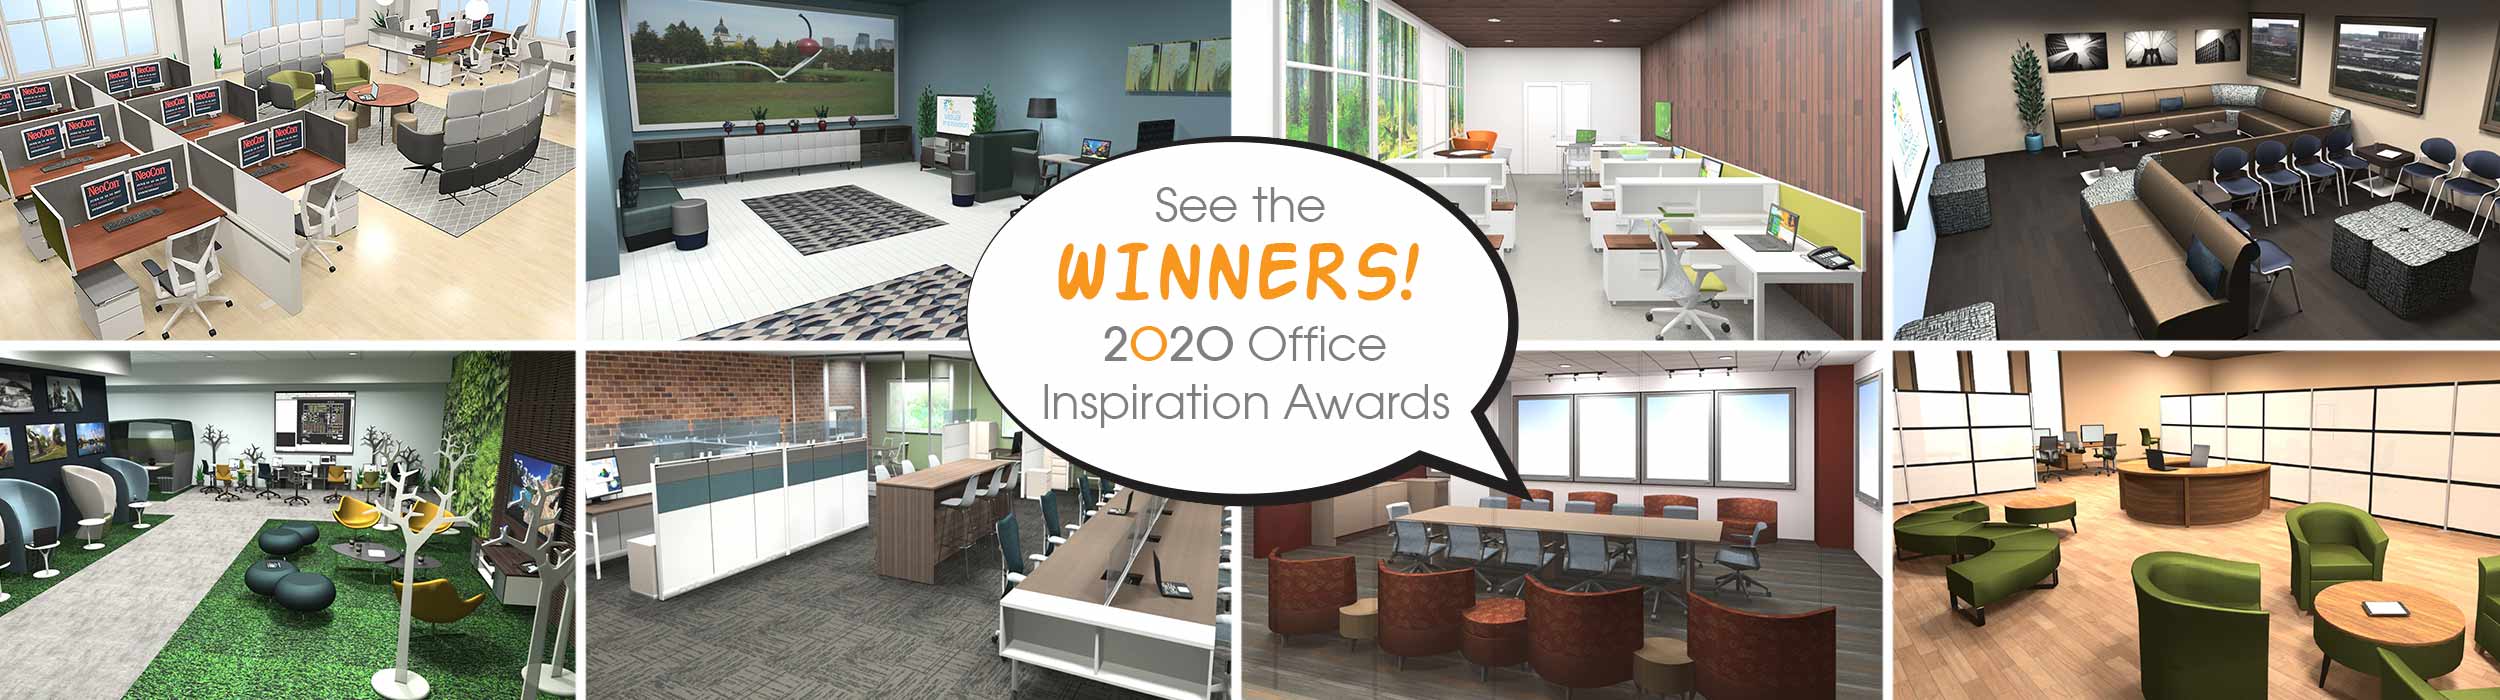 2020 Office Inspiration Awards Winners